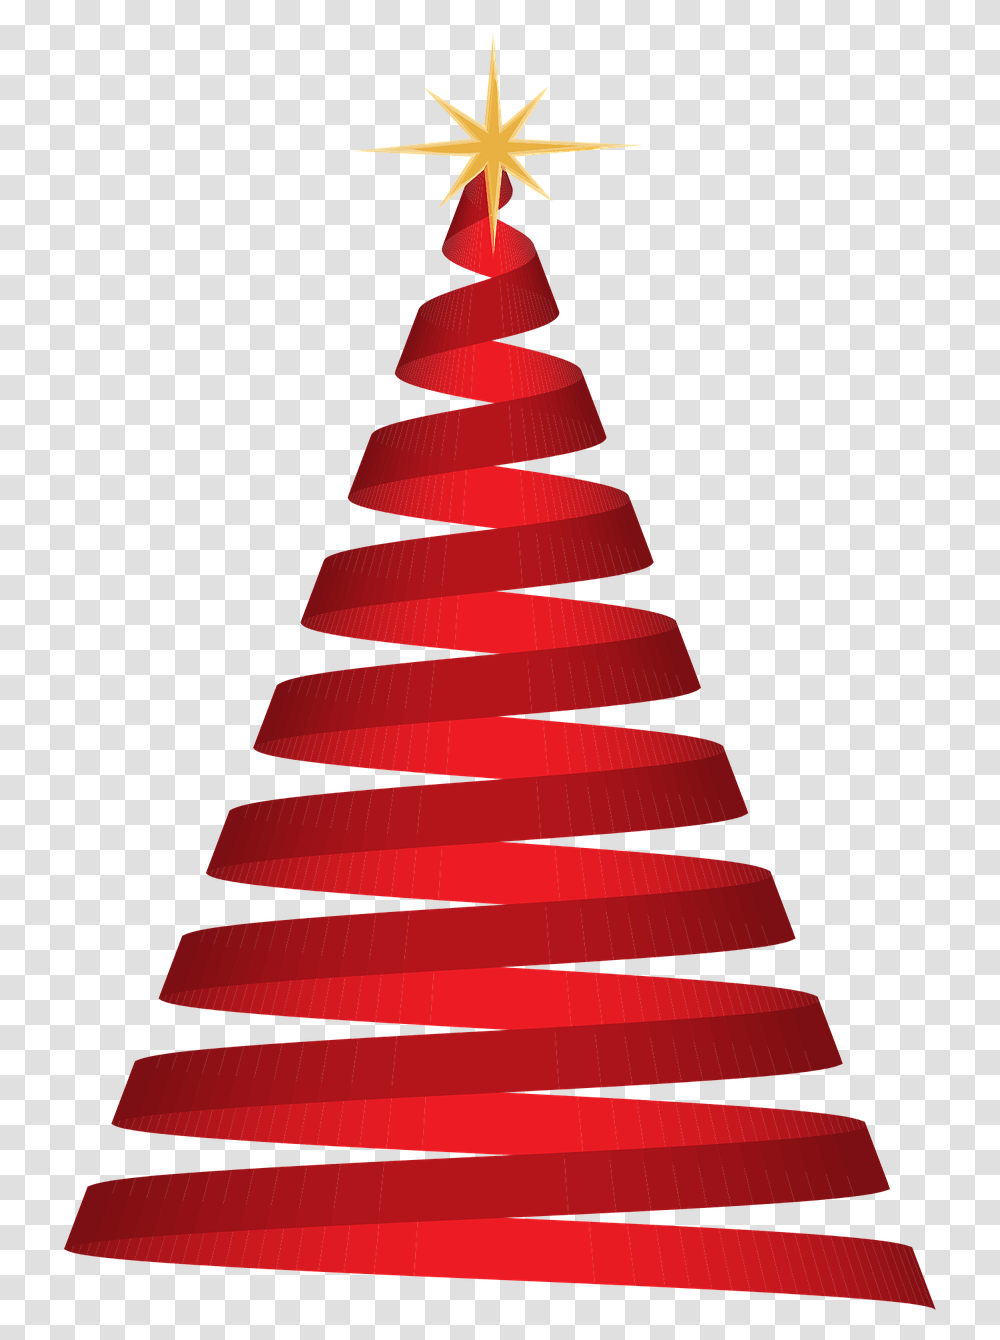 Christmas Tree Red Free Vector Graphic On Pixabay Arvore De Natal De Fita, Cone, Triangle, Cross, Symbol Transparent Png